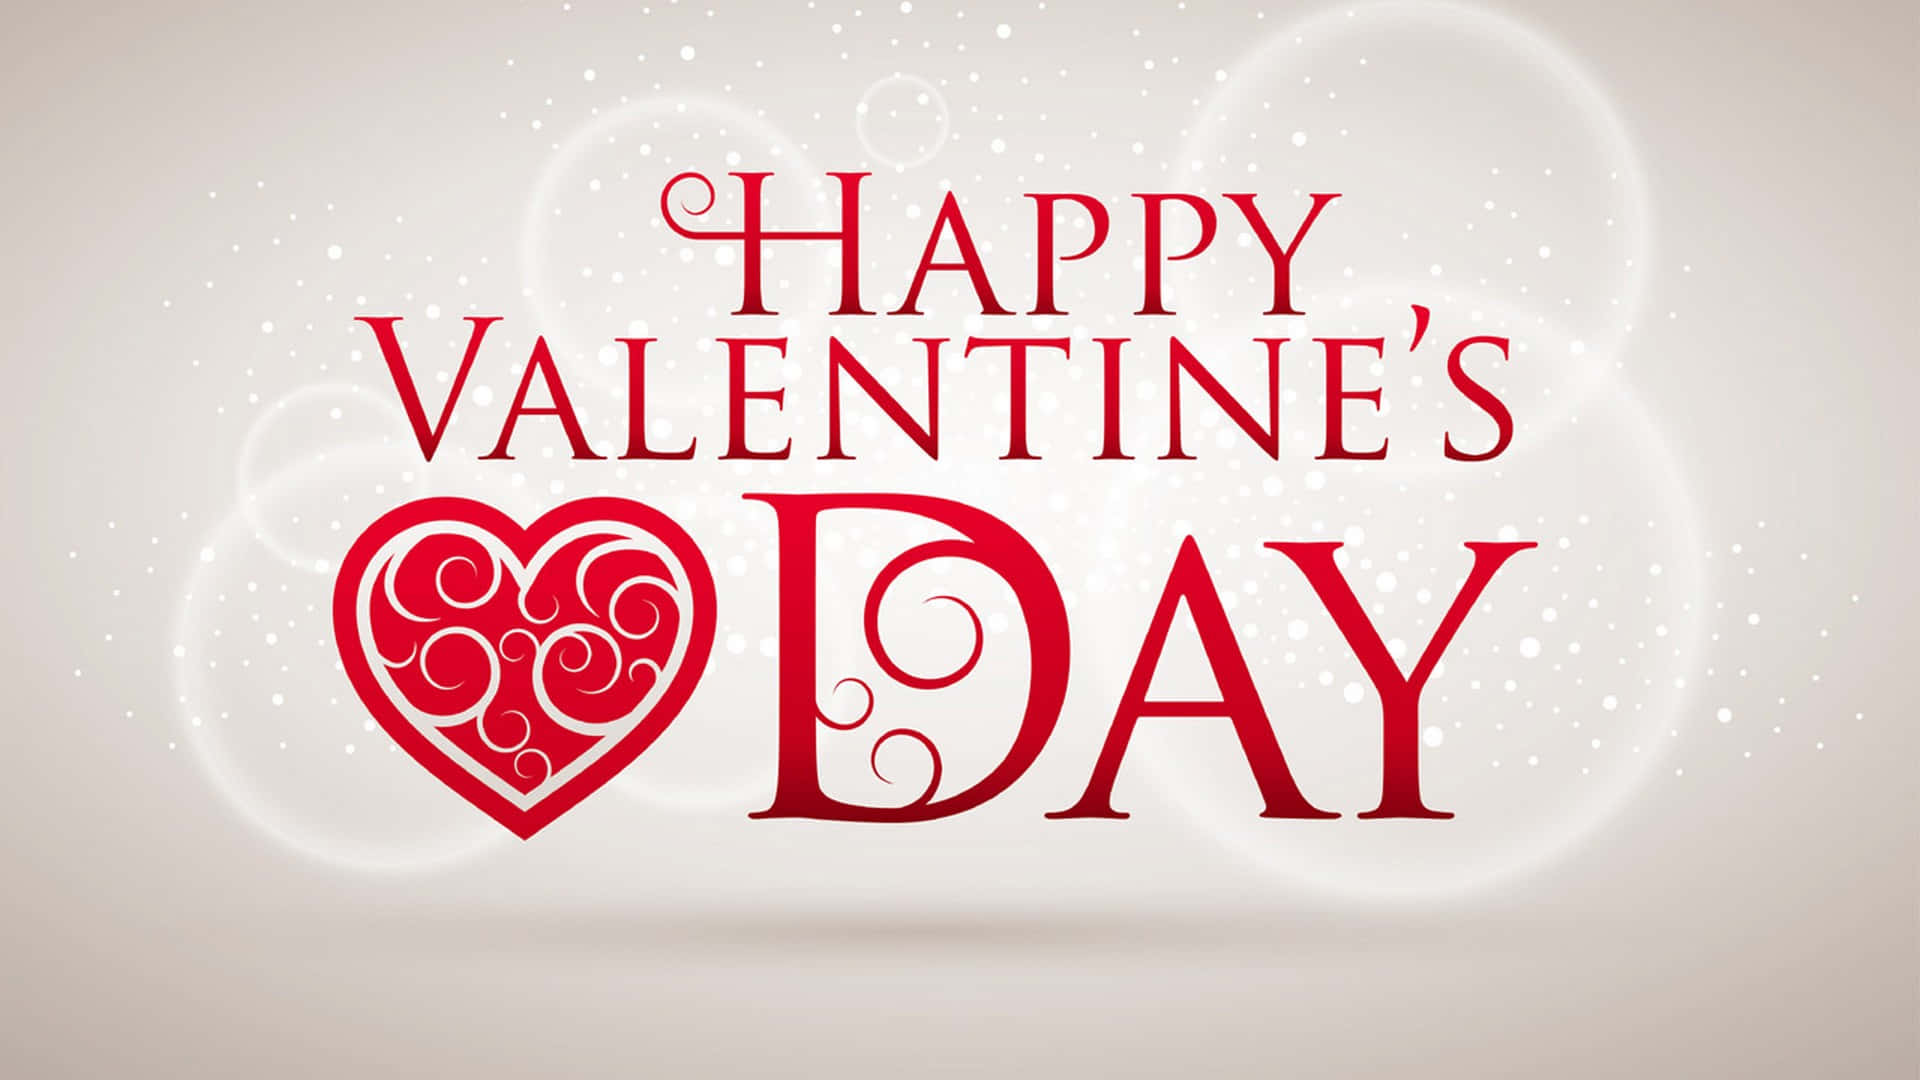 ♥ Wishing you a Happy Valentine's Day!